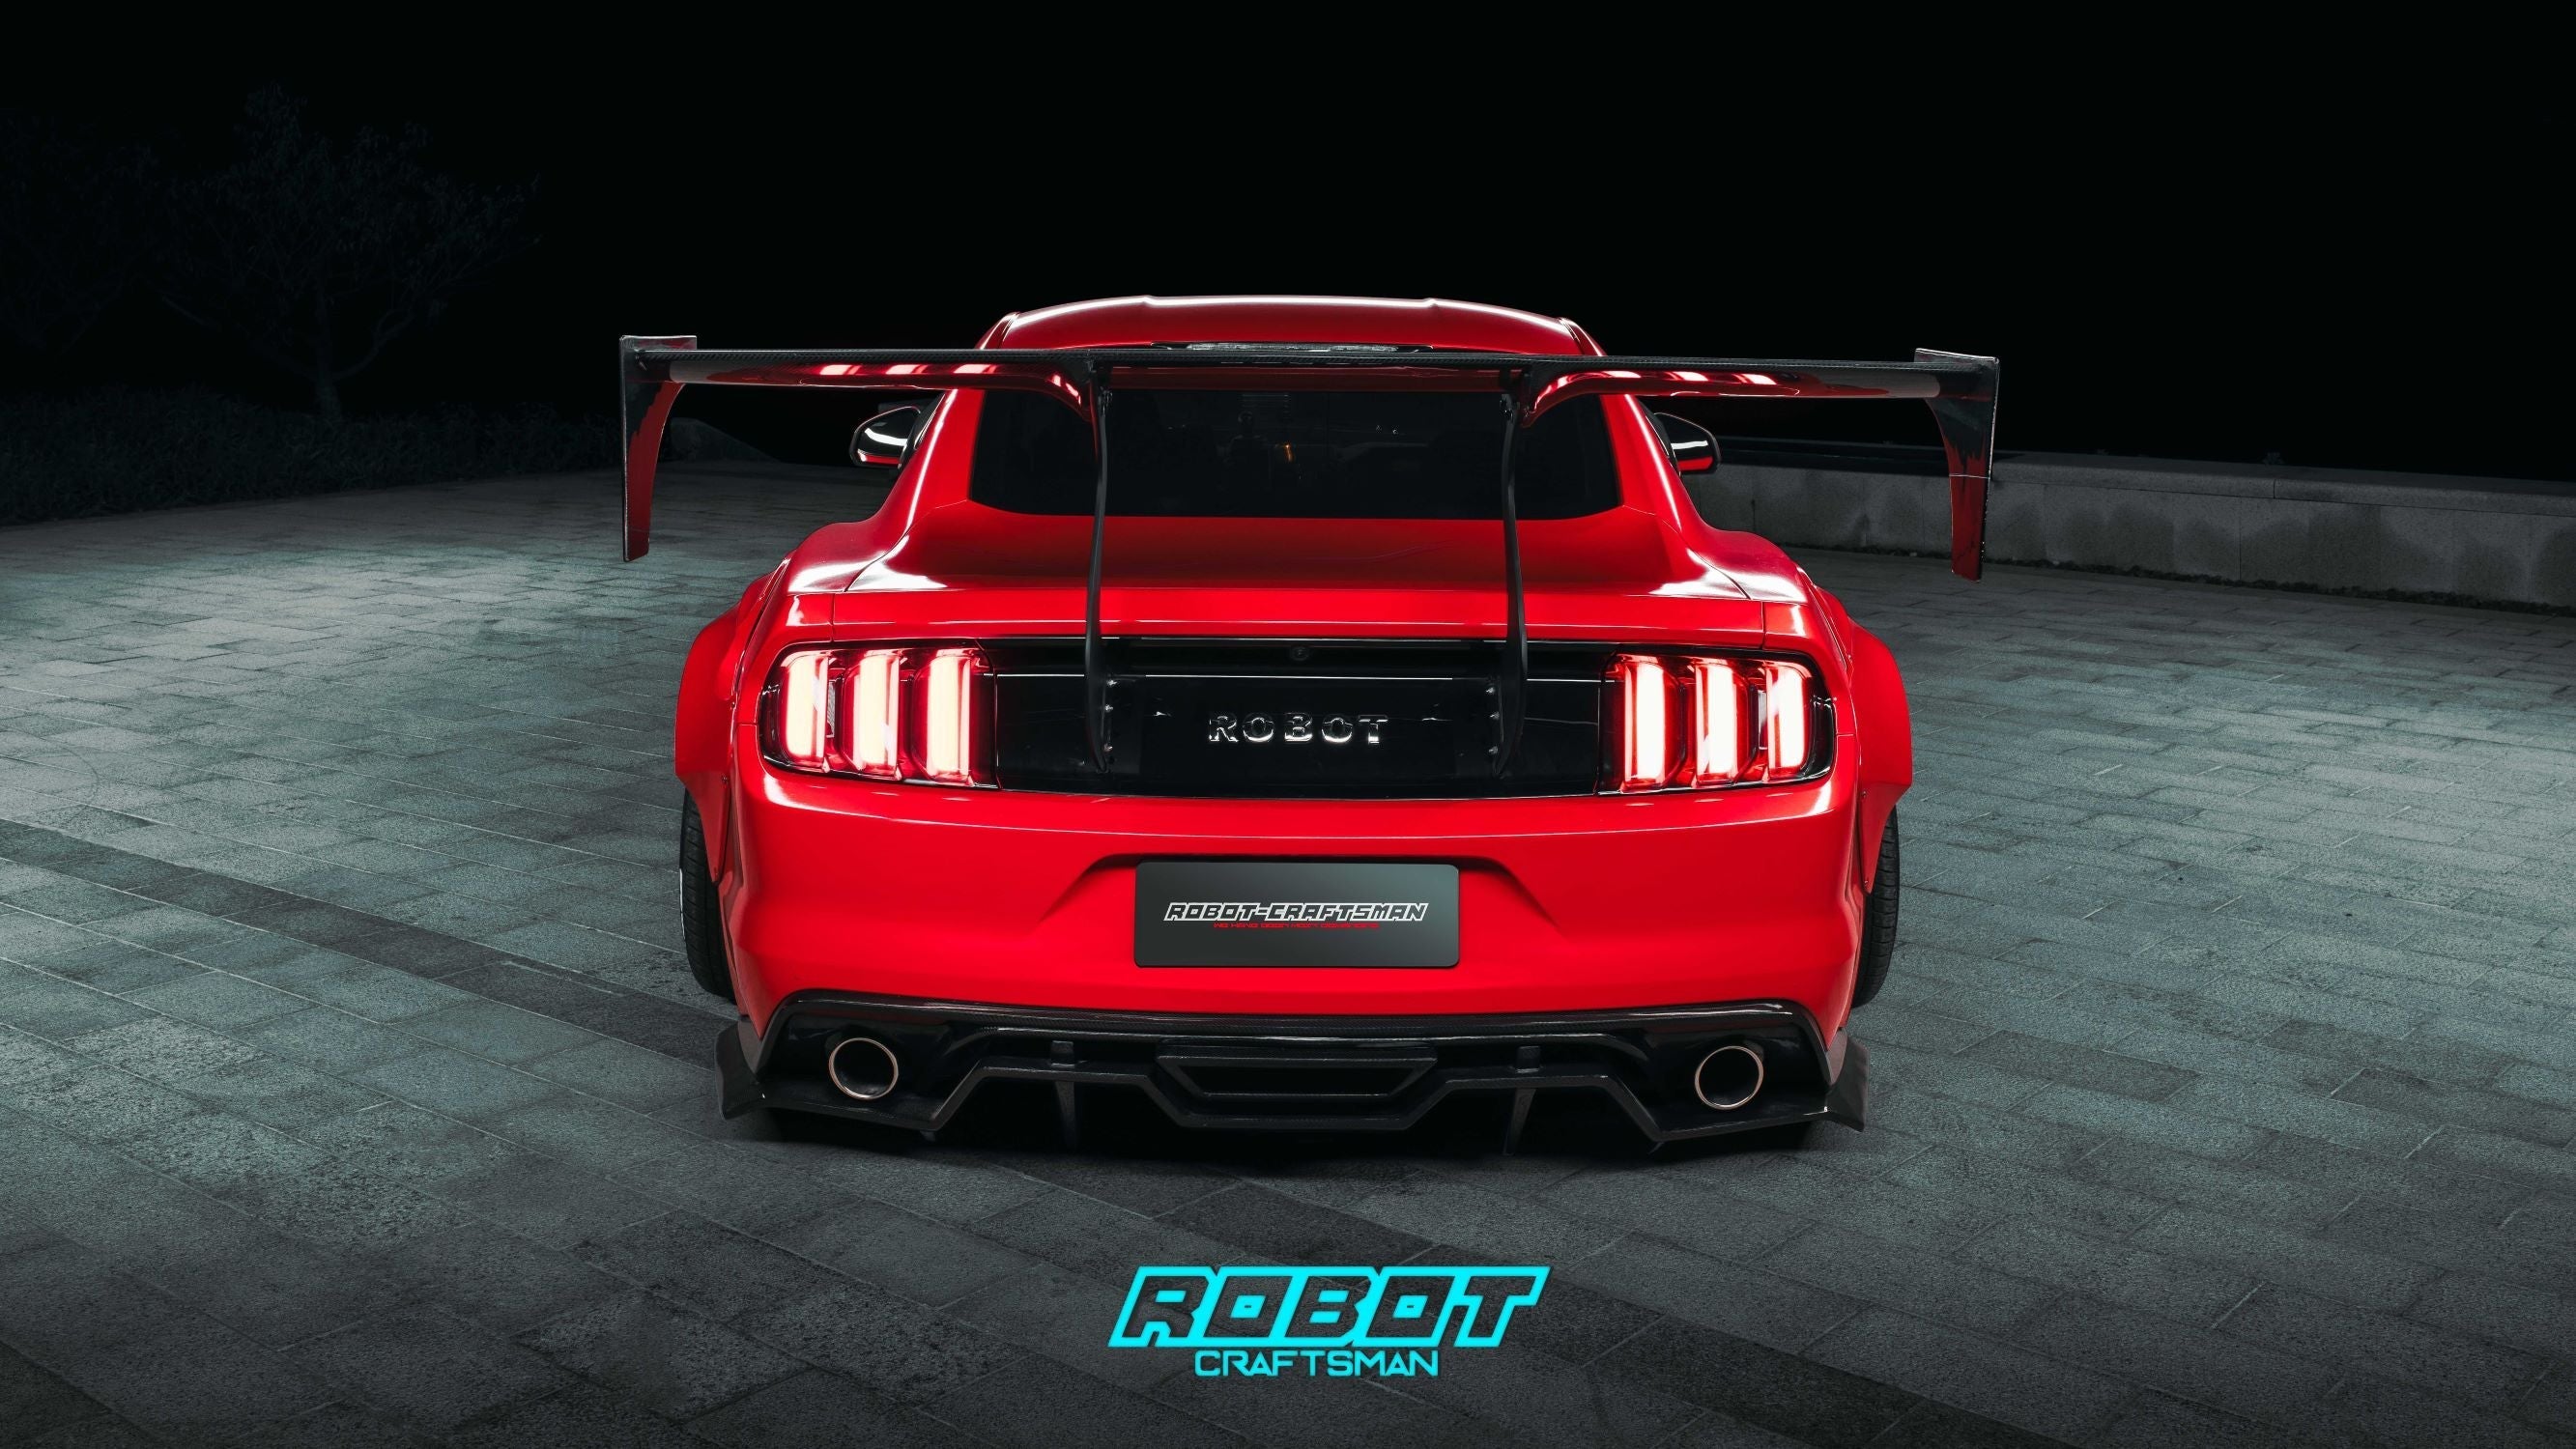 ROBOT CRAFTSMAN  "STORM" Rear Diffuser For Ford Mustang S550.1 S550.2 GT EcoBoost V6 Carbon Fiber or FRP